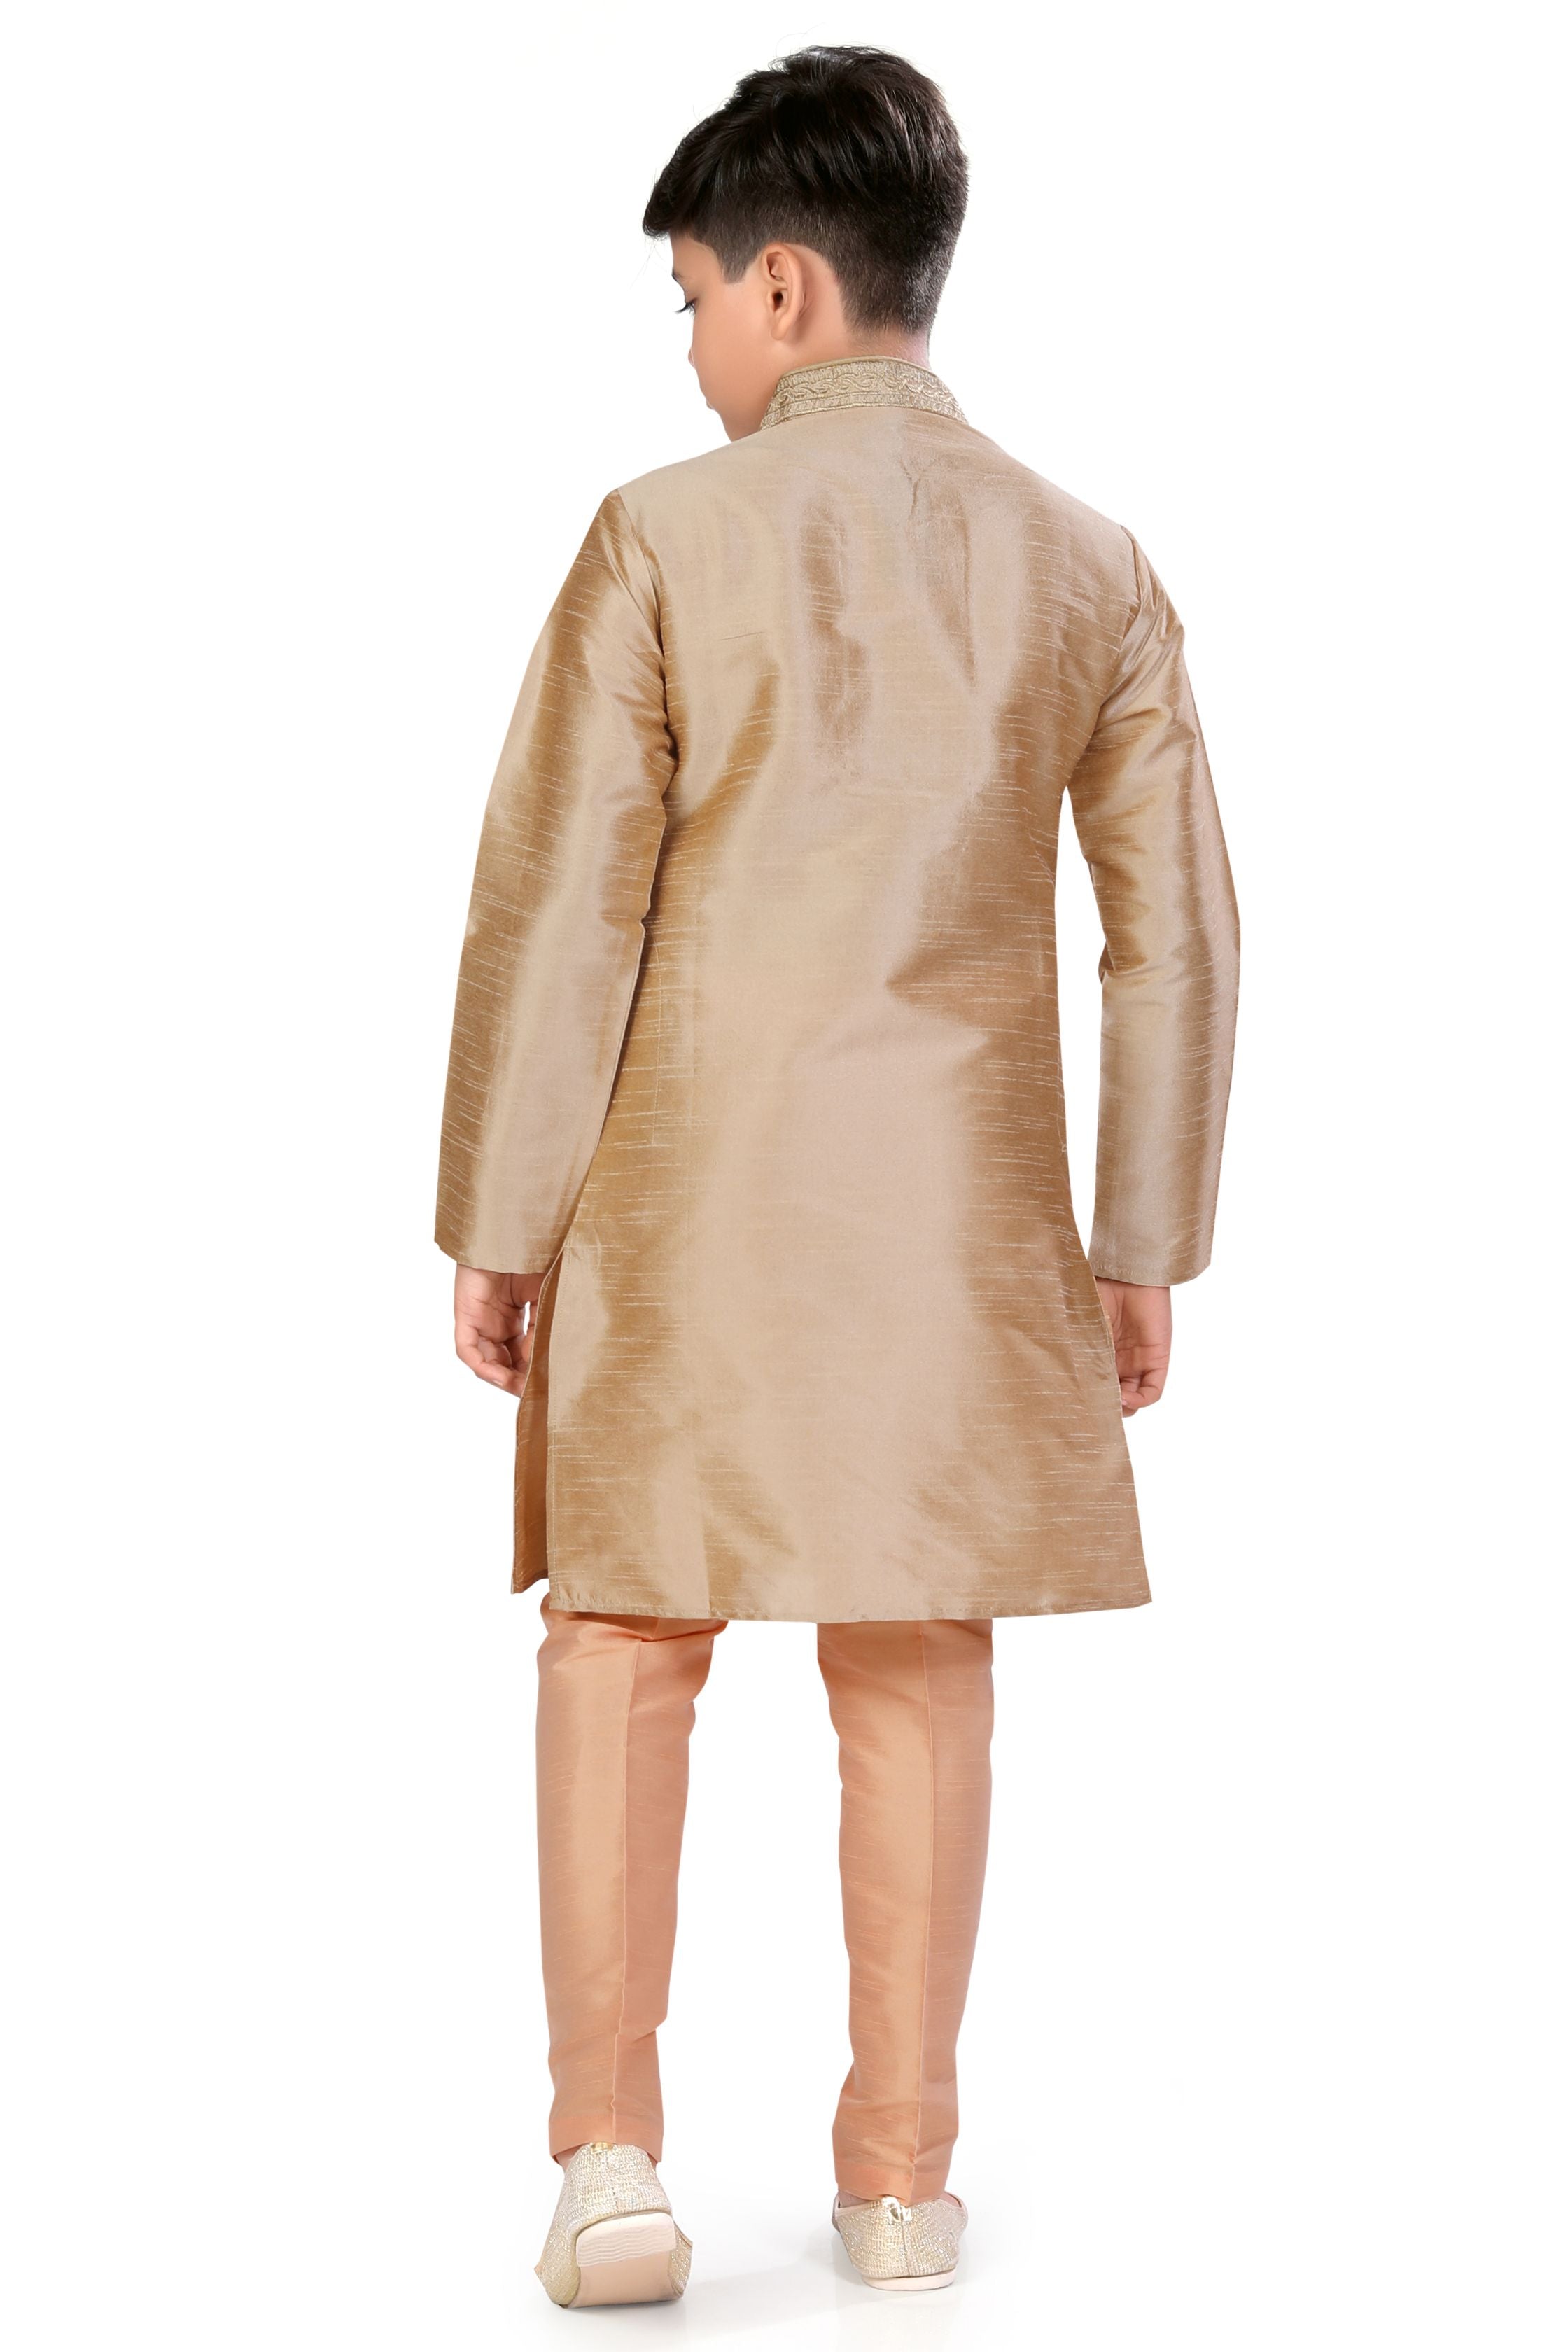 Boys Dupion Silk Embroidered Kurta Pajama Set in Beige Colour - Premium kurta pajama from Dapper Ethnic - Just $55! Shop now at Dulhan Exclusives